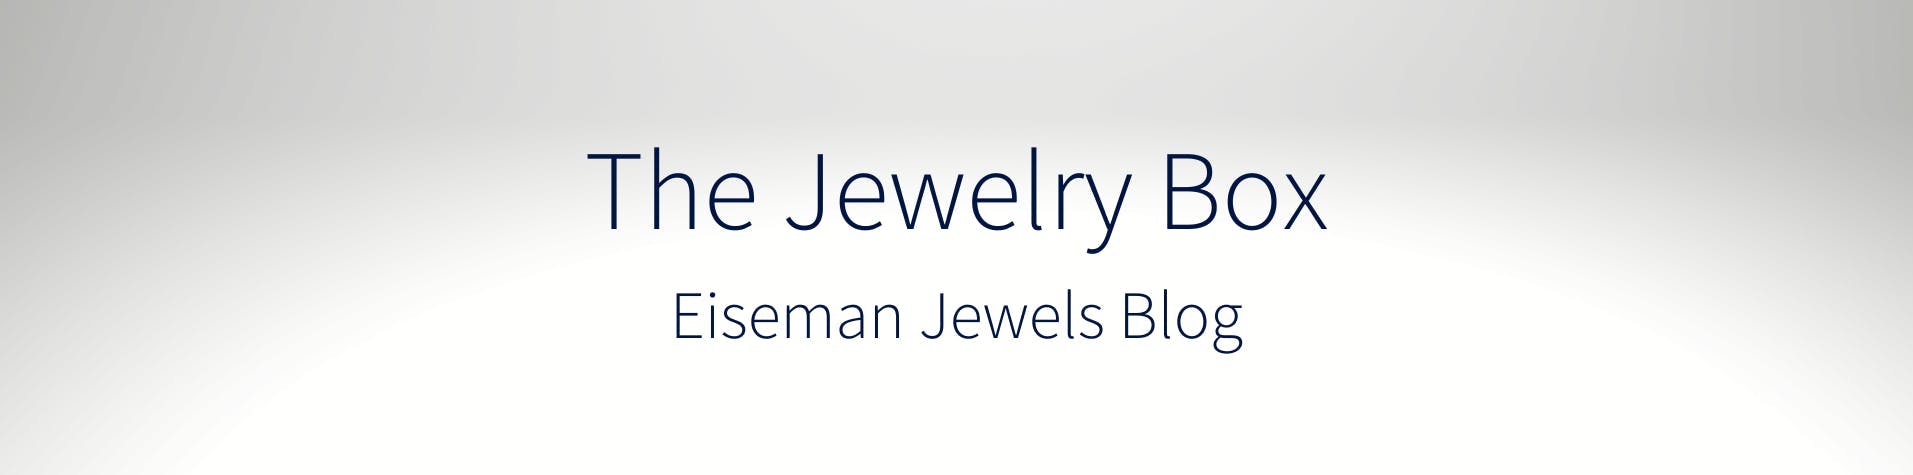 The Jewelry Box: Eiseman Jewels Blog